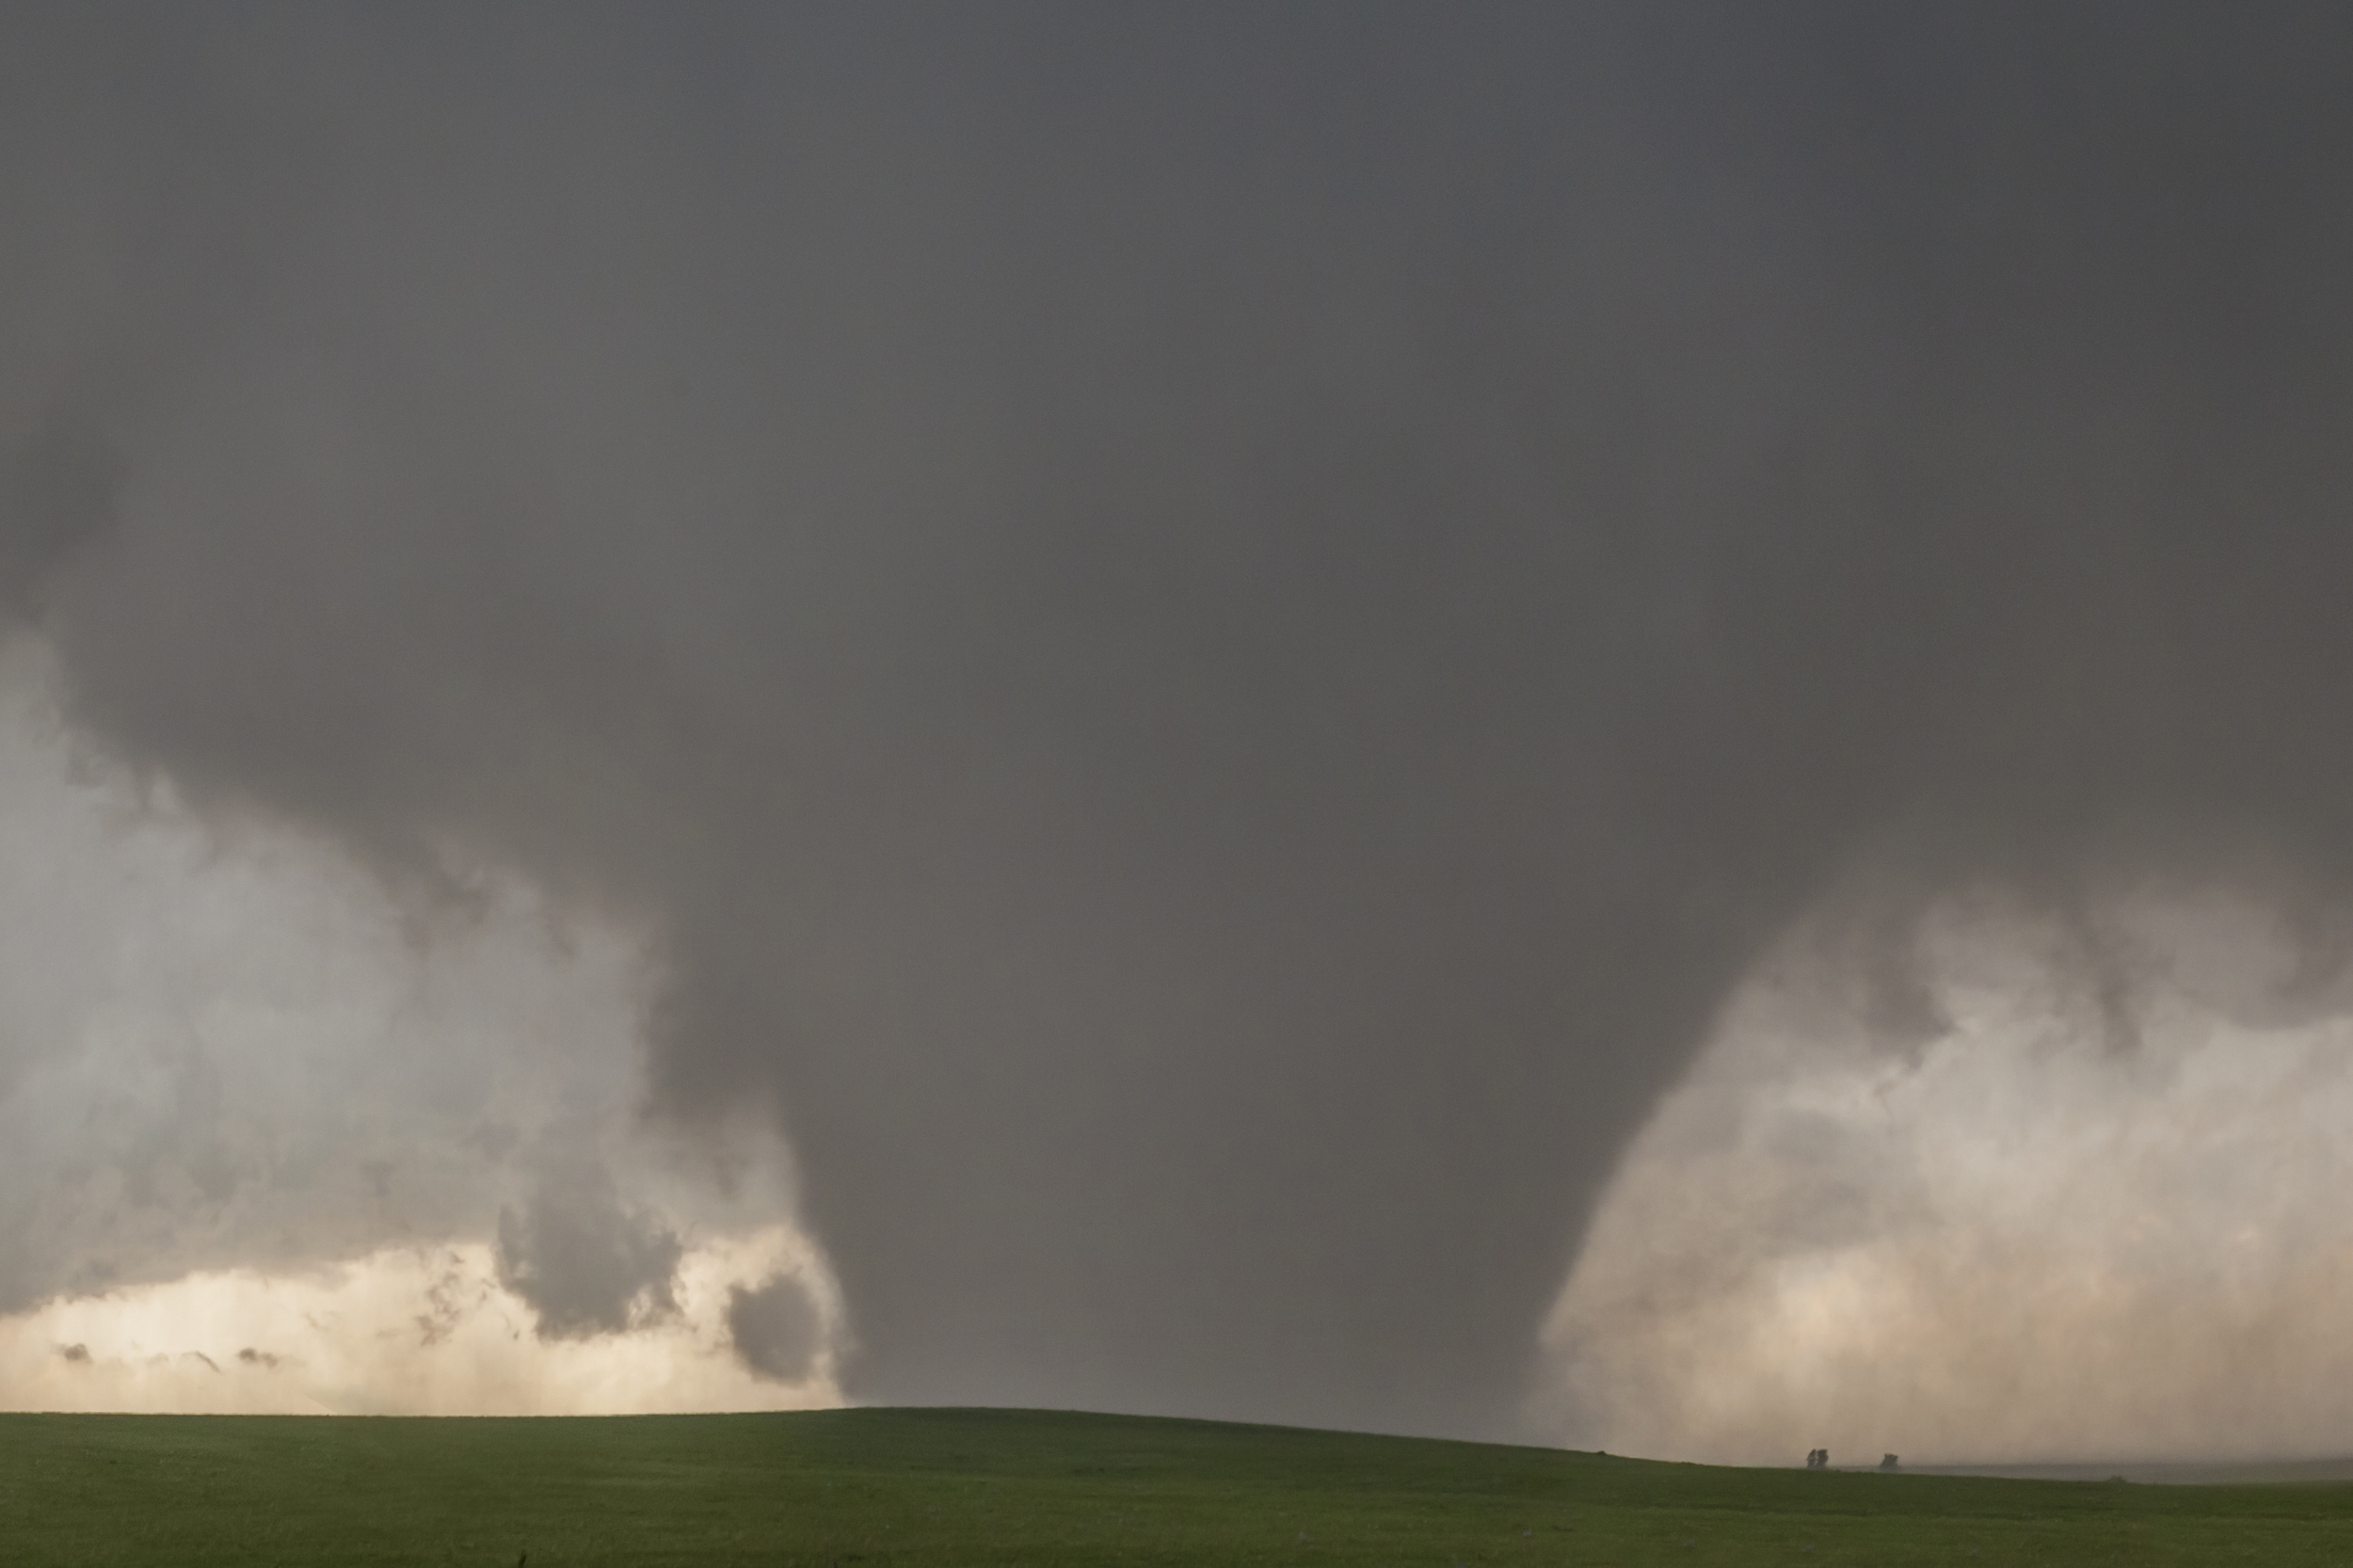  Massive wedge tornado outside of Bennington, Kansas on May 28, 2013 